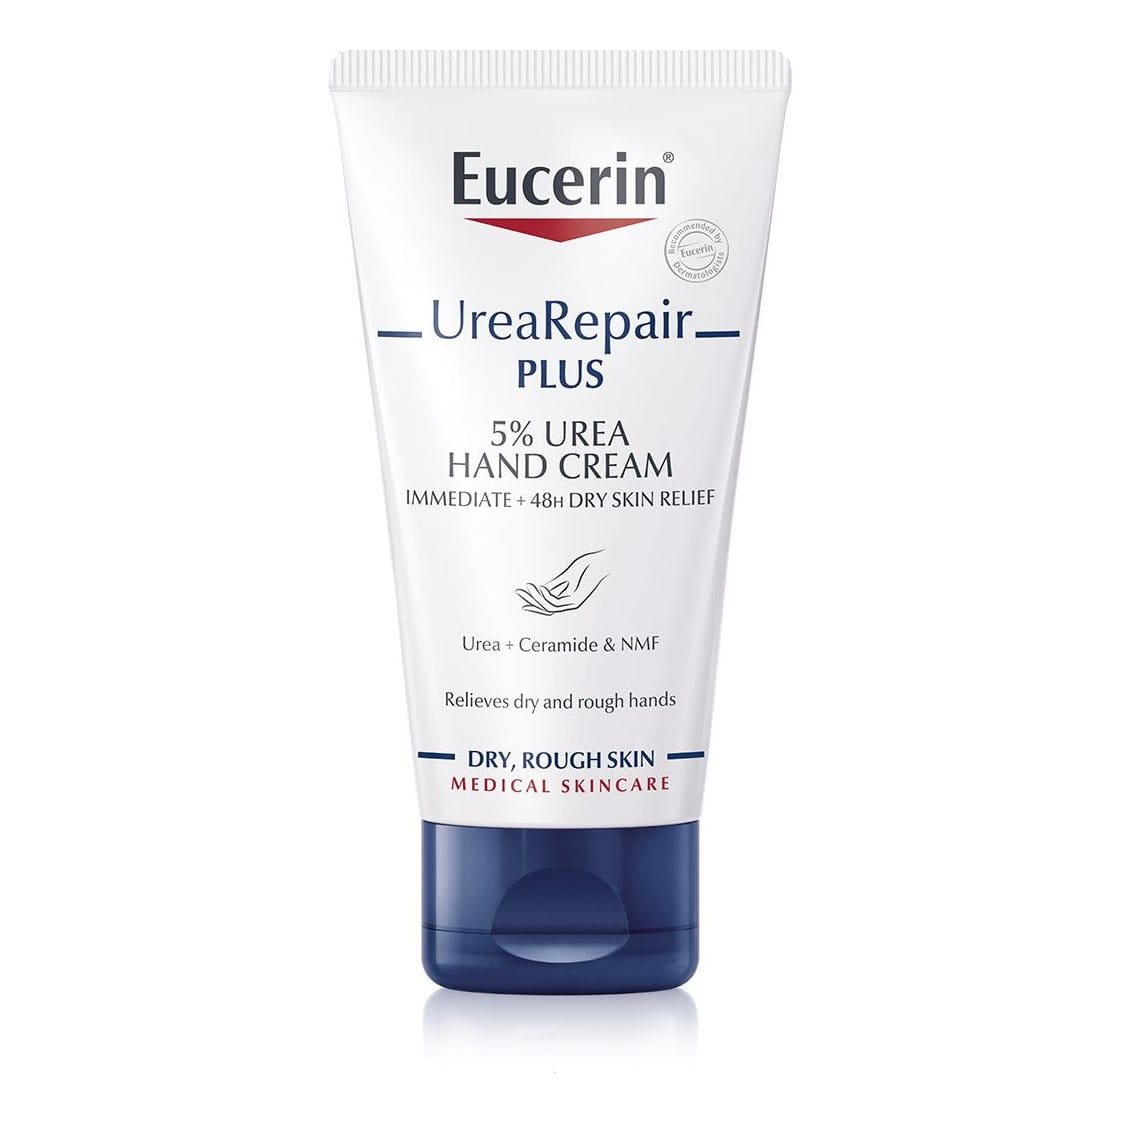 Eucerin UreaRepair PLUS 5% Urea Hand Cream